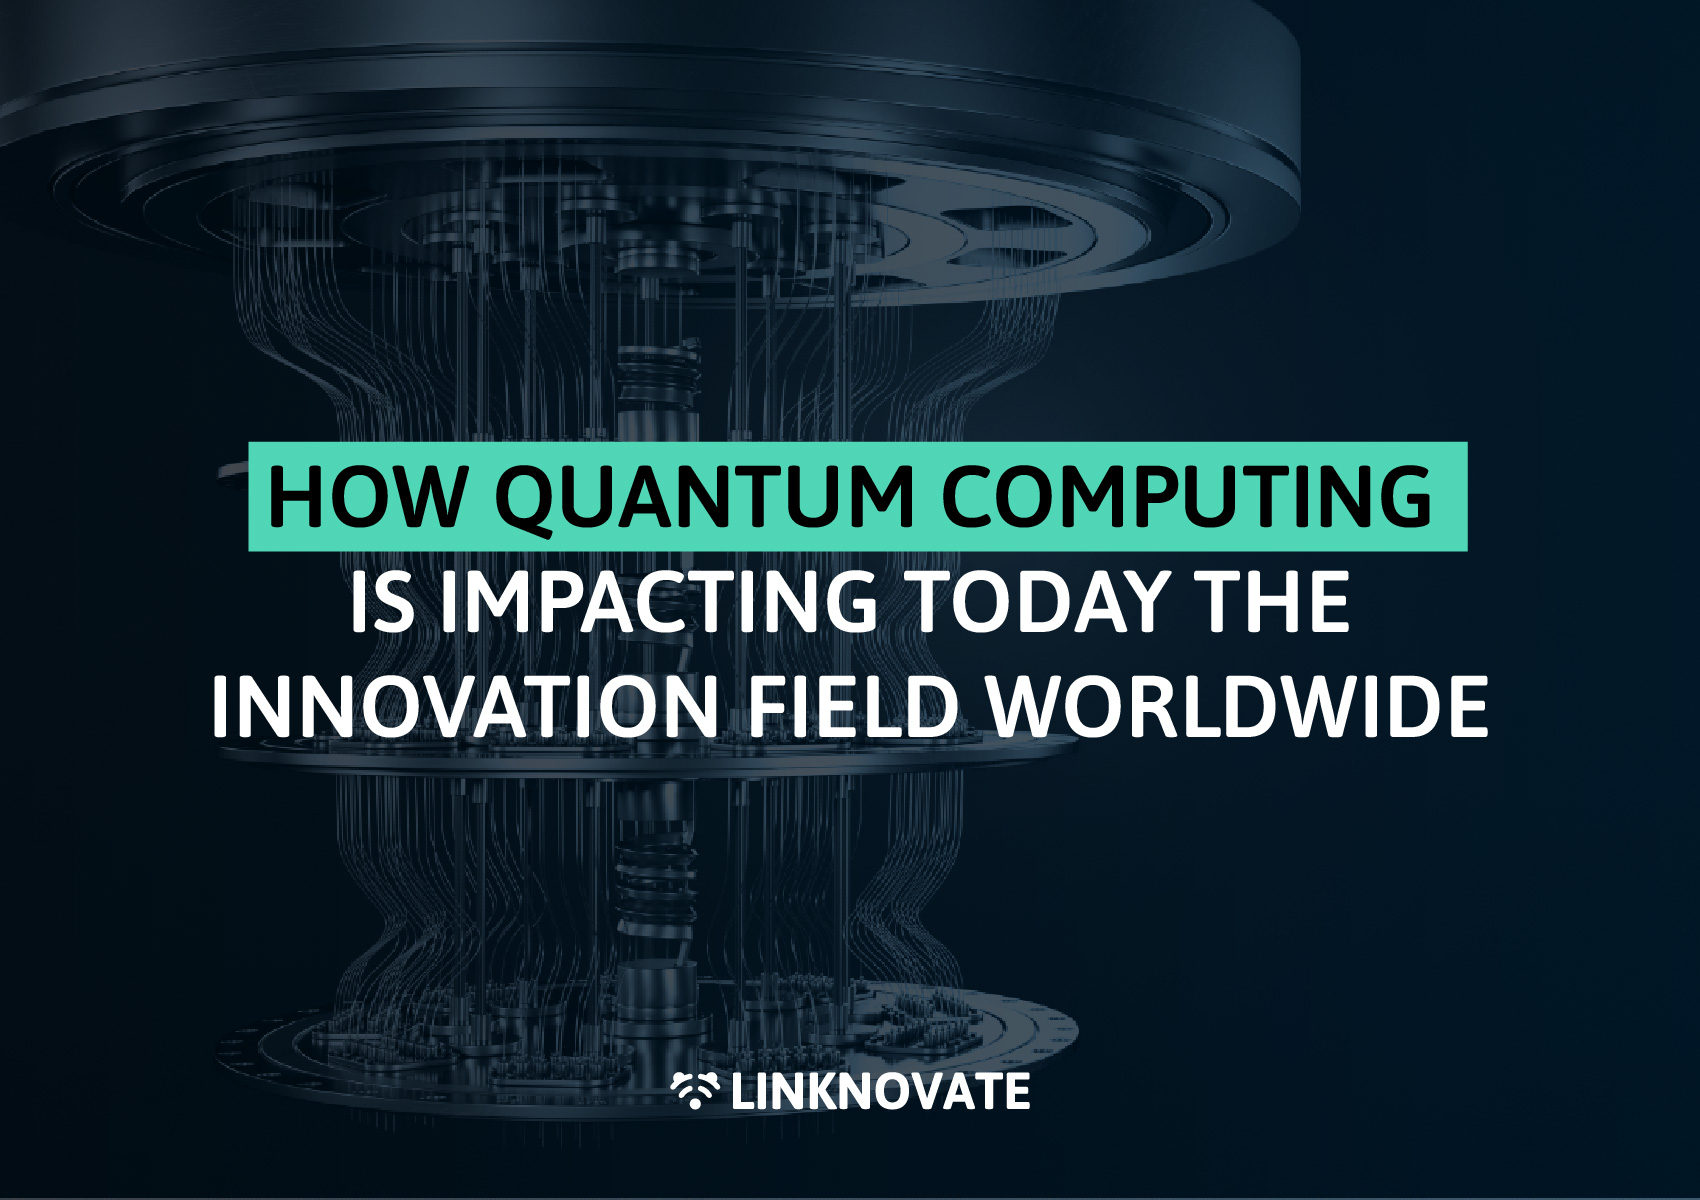 The impact of Quantum Computing in 5 key sectors